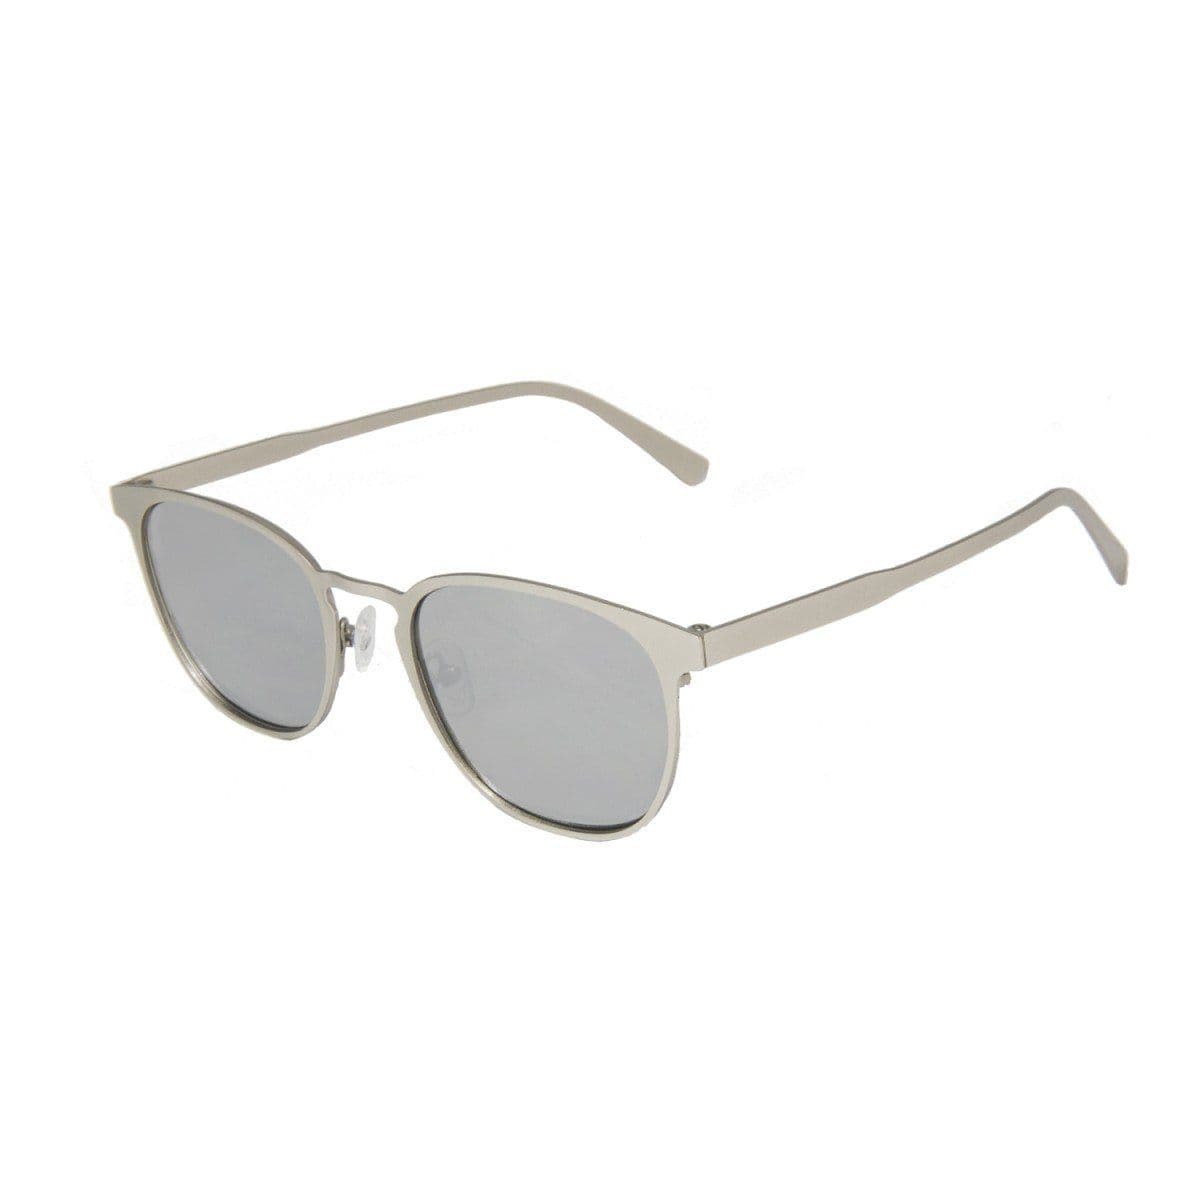 Ocean Ava Sunglasses